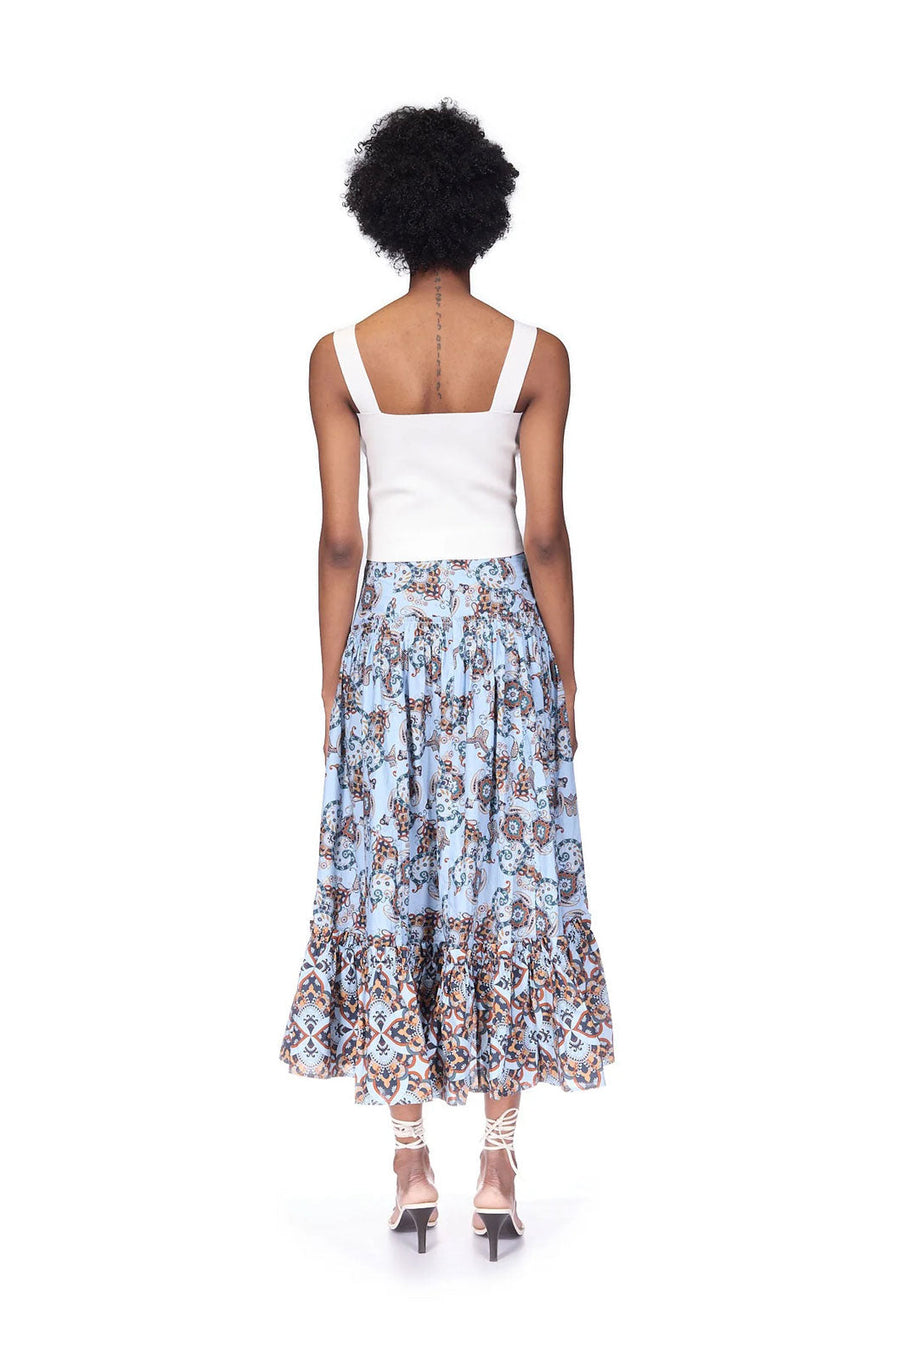 cara cara tisbury skirt blue floral figure back